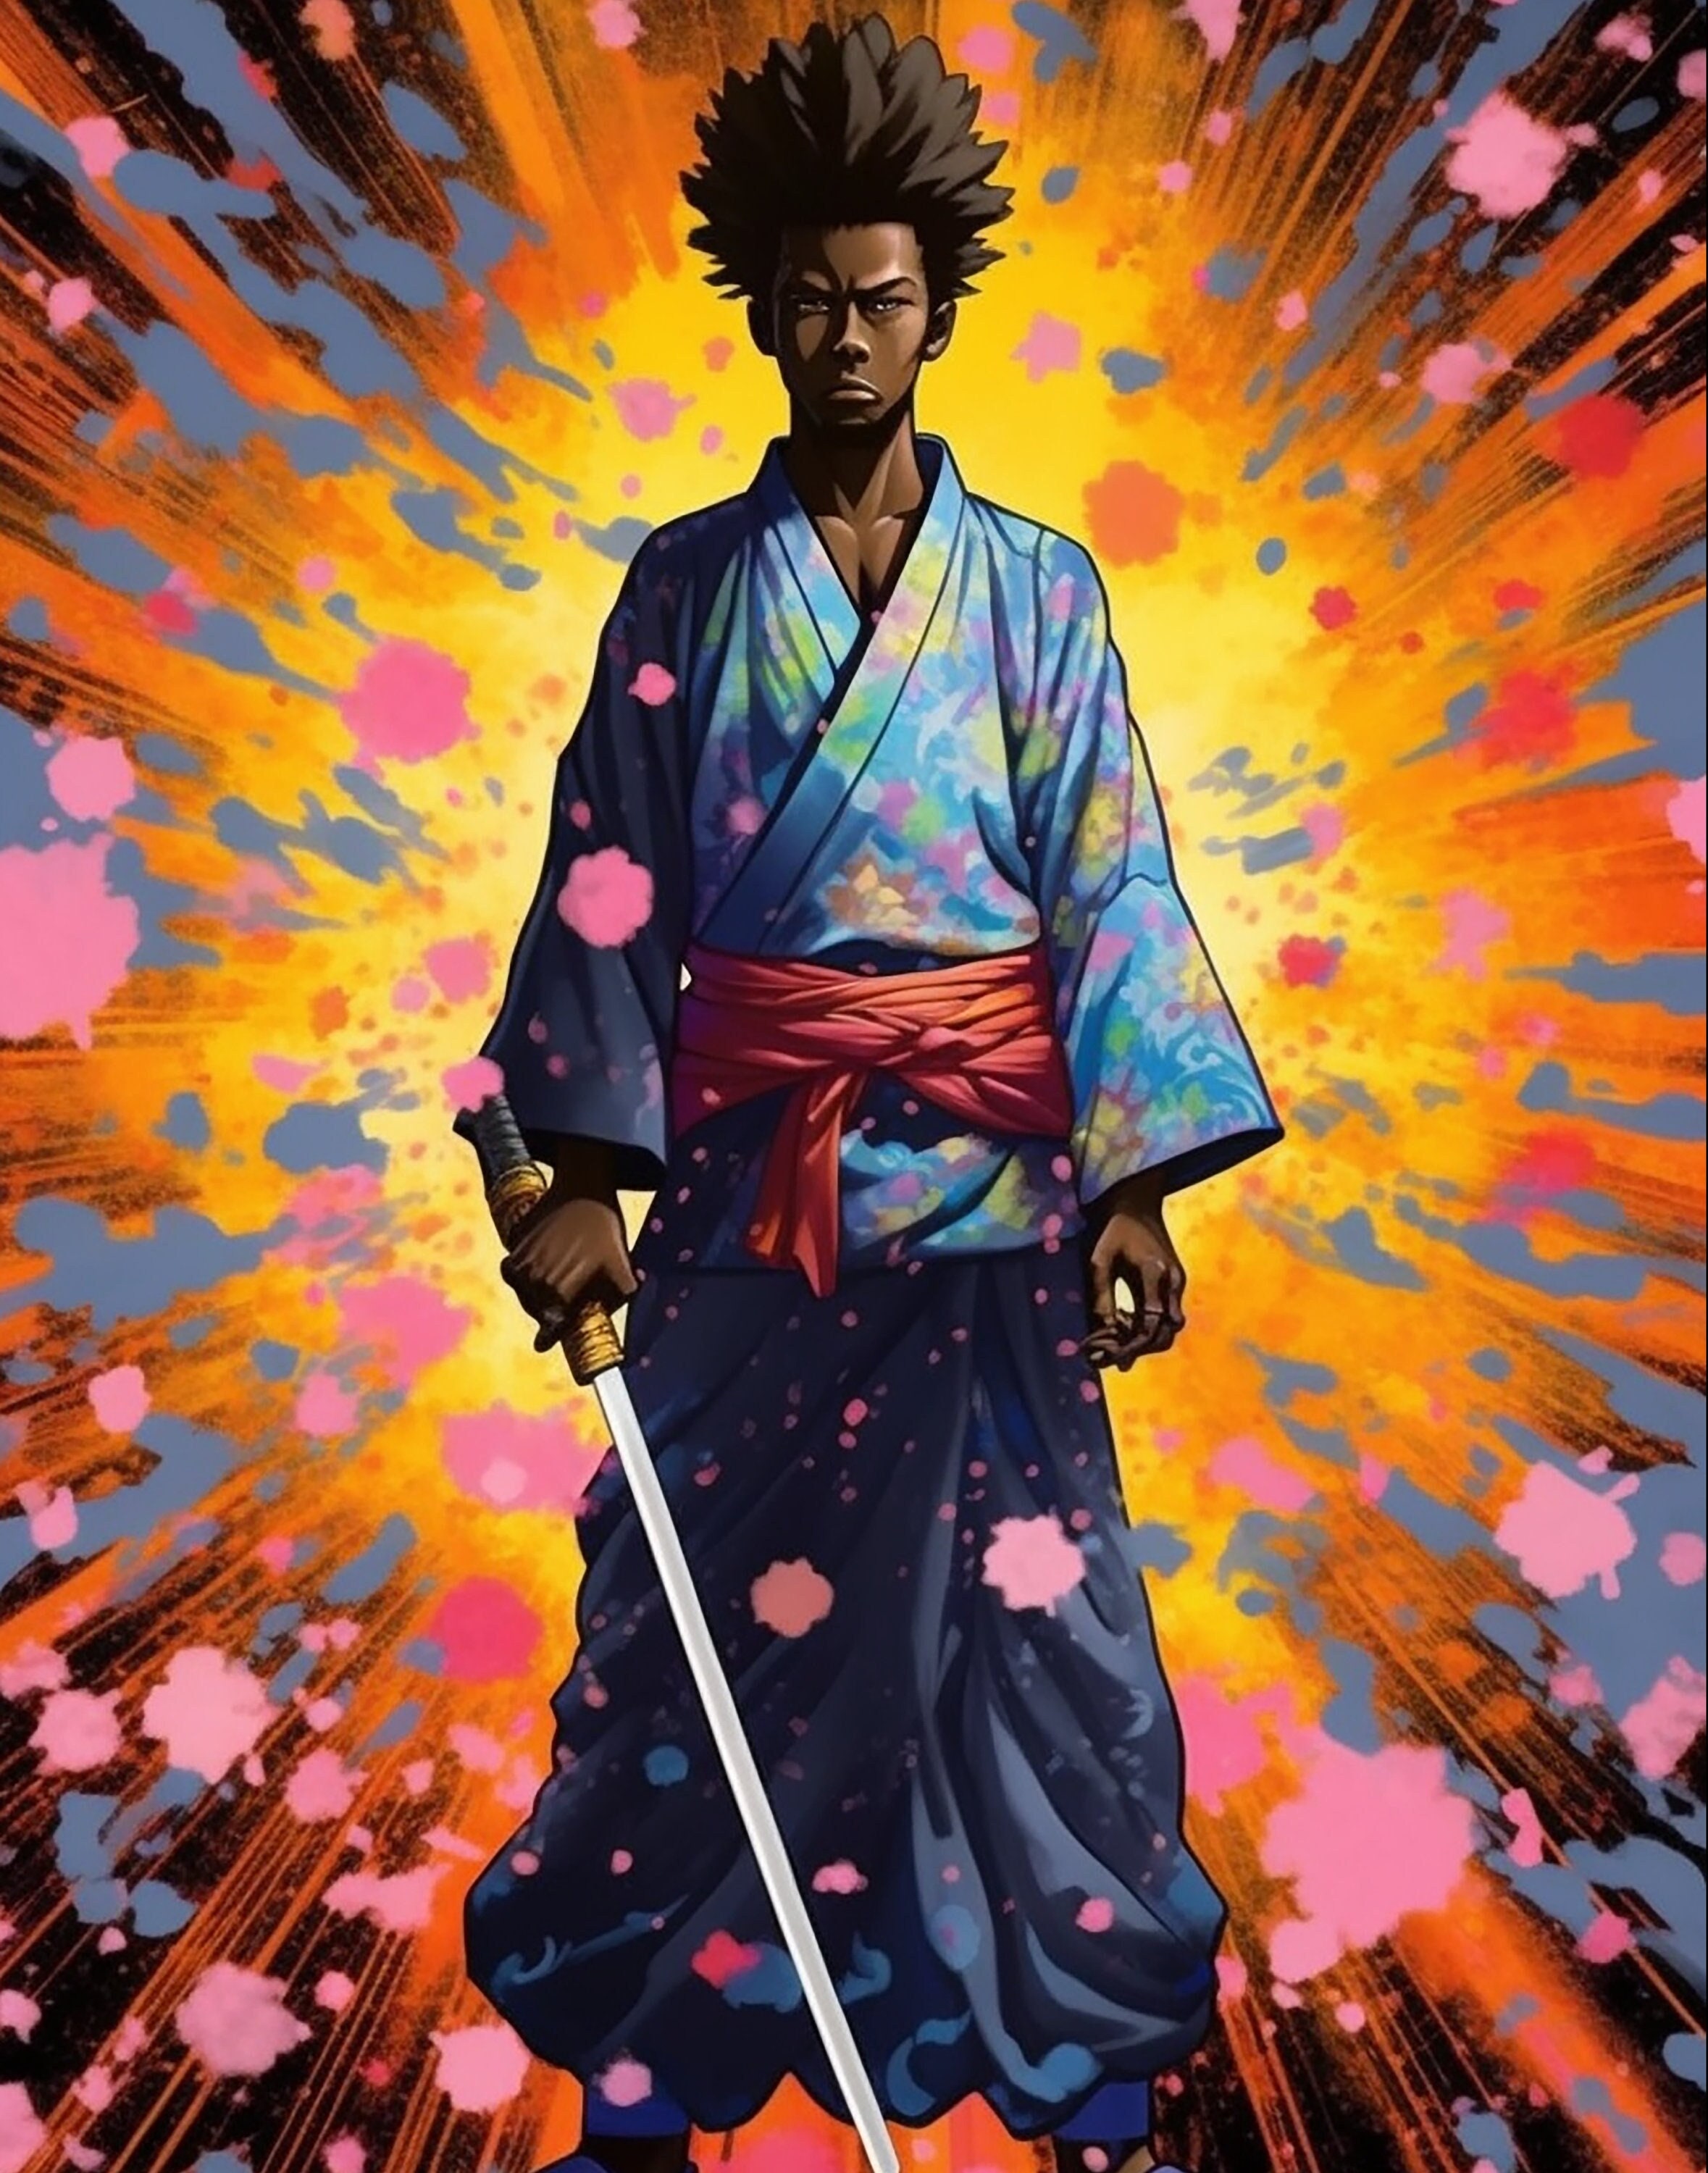 Afro Samurai Anime Photographic Prints for Sale